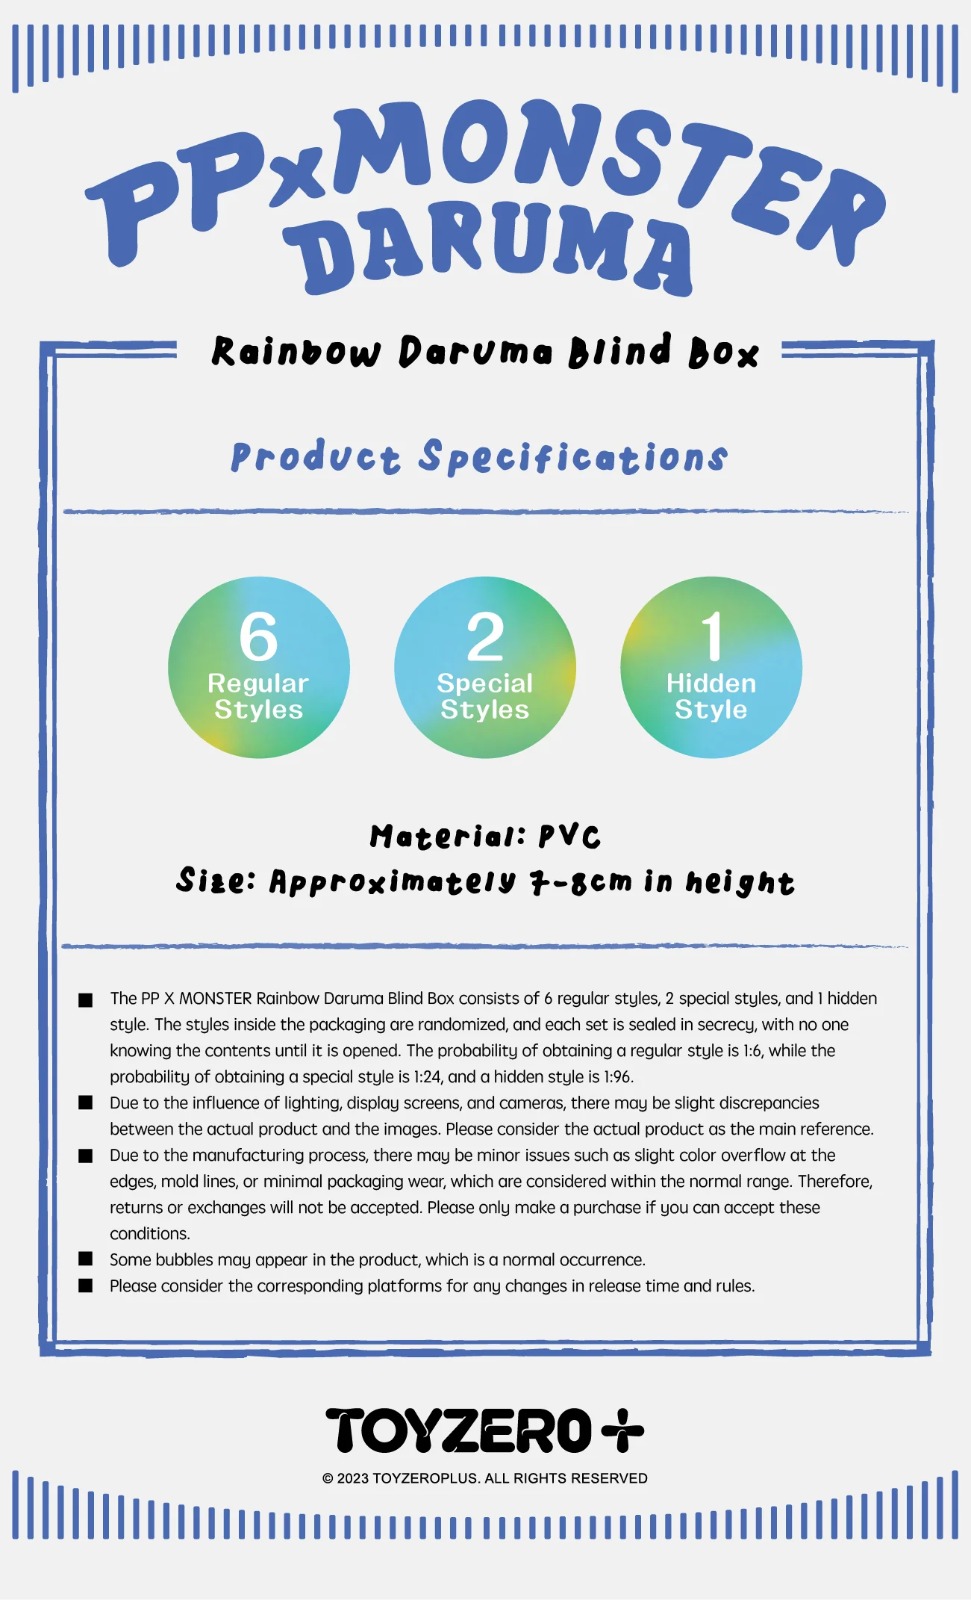 Rainbow Daruma Blind Box by PP X MONSTER - myplasticheart